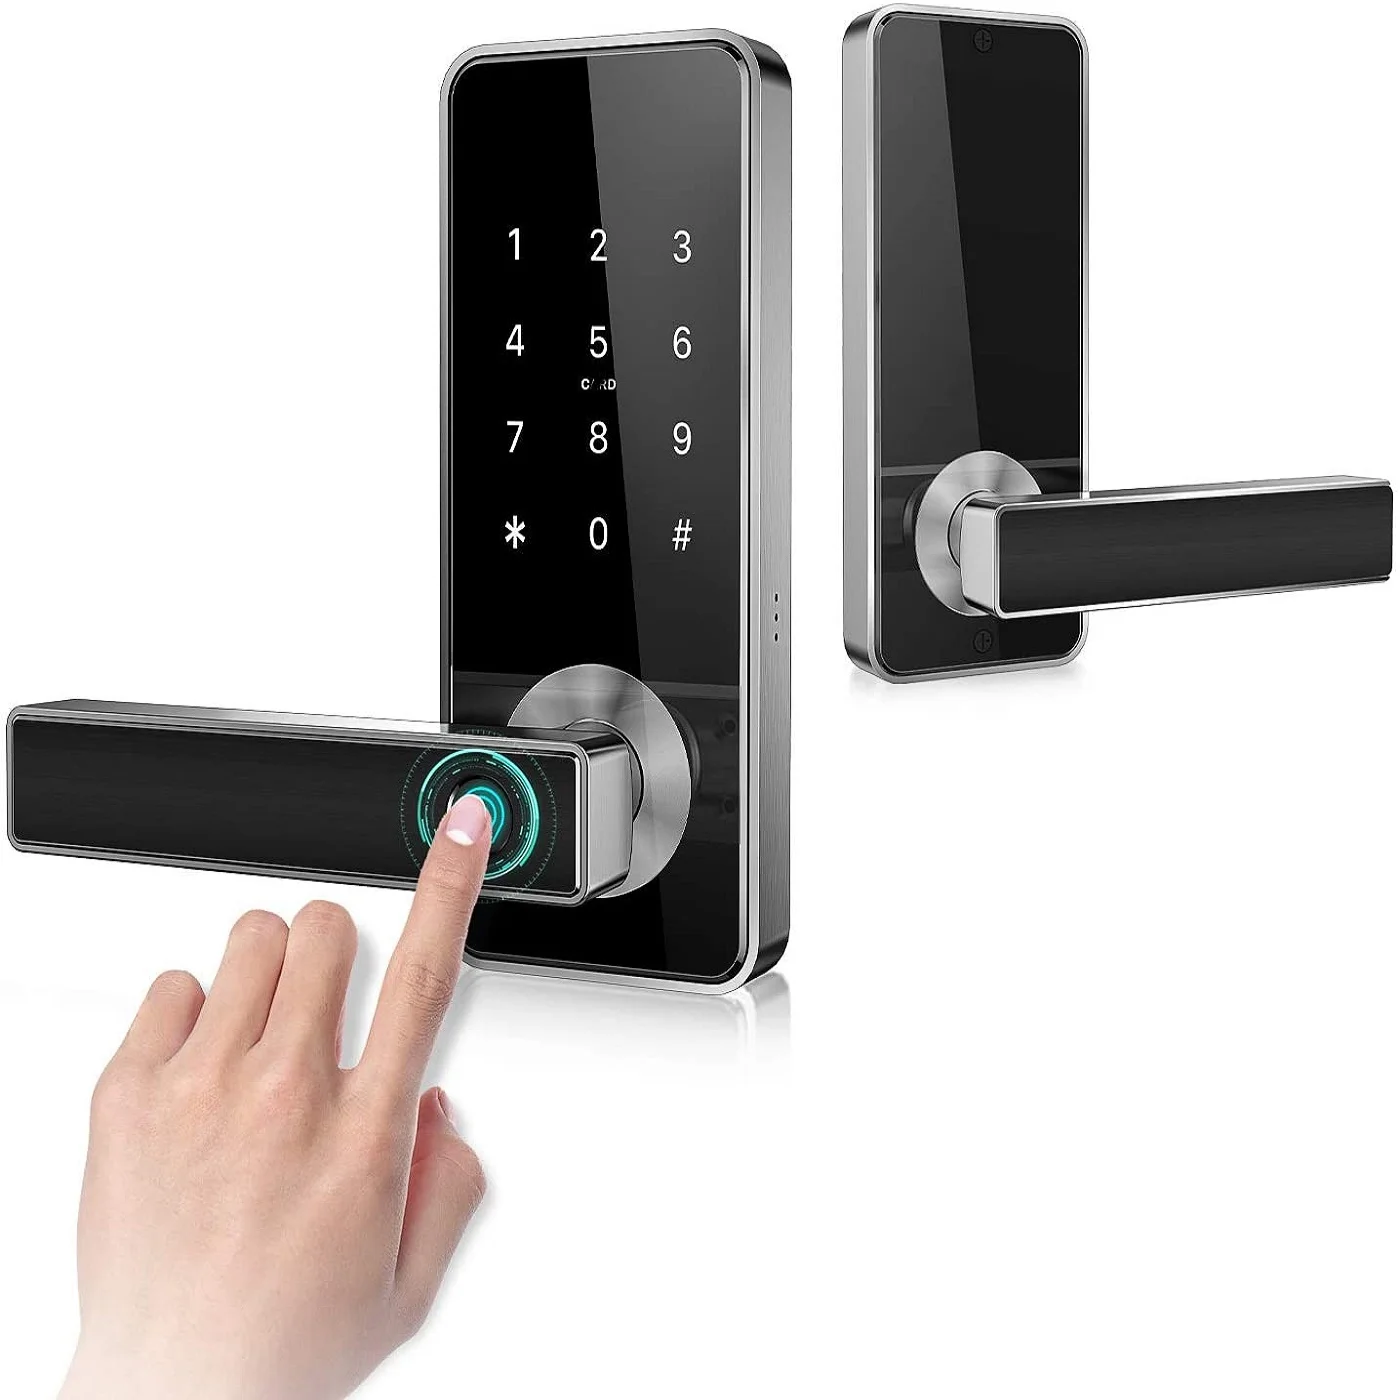 

Hot style home smart fingerprint password lock